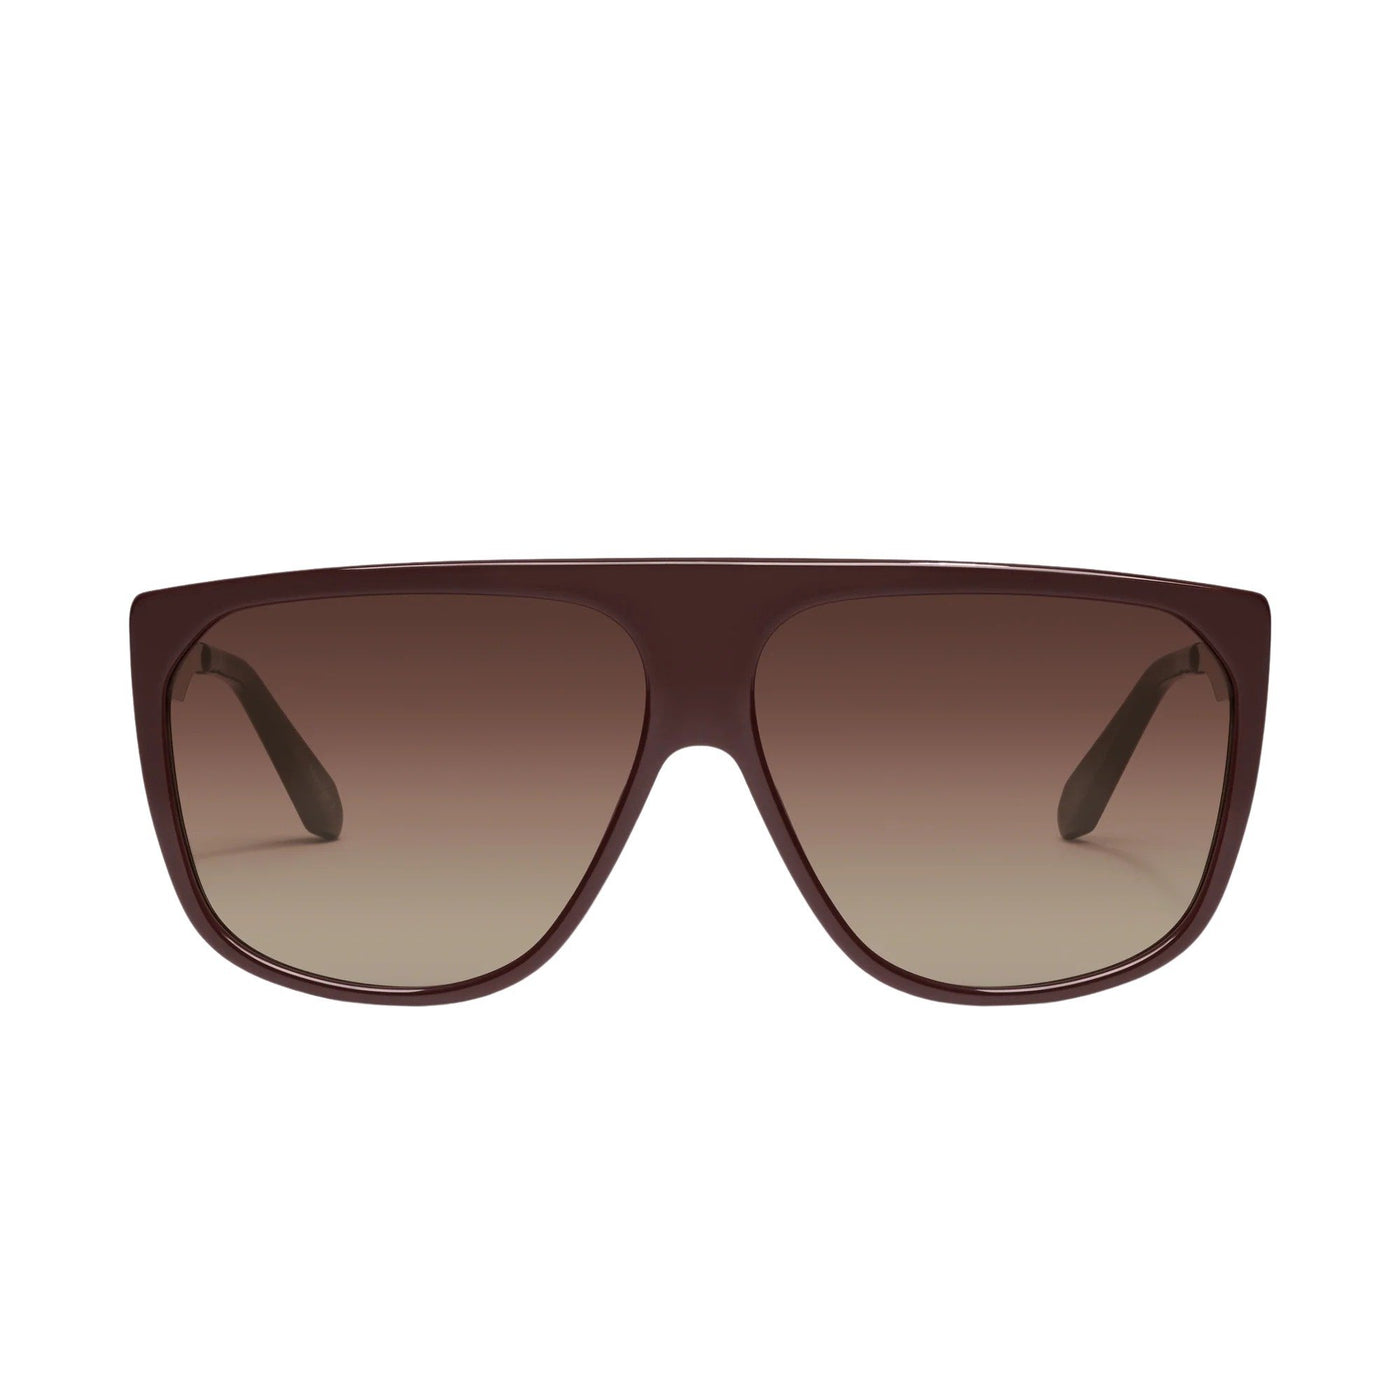 Quay Women's No Curfew Oversized Shield Sunglasses (Espresso Frame/Brown Lens) - front